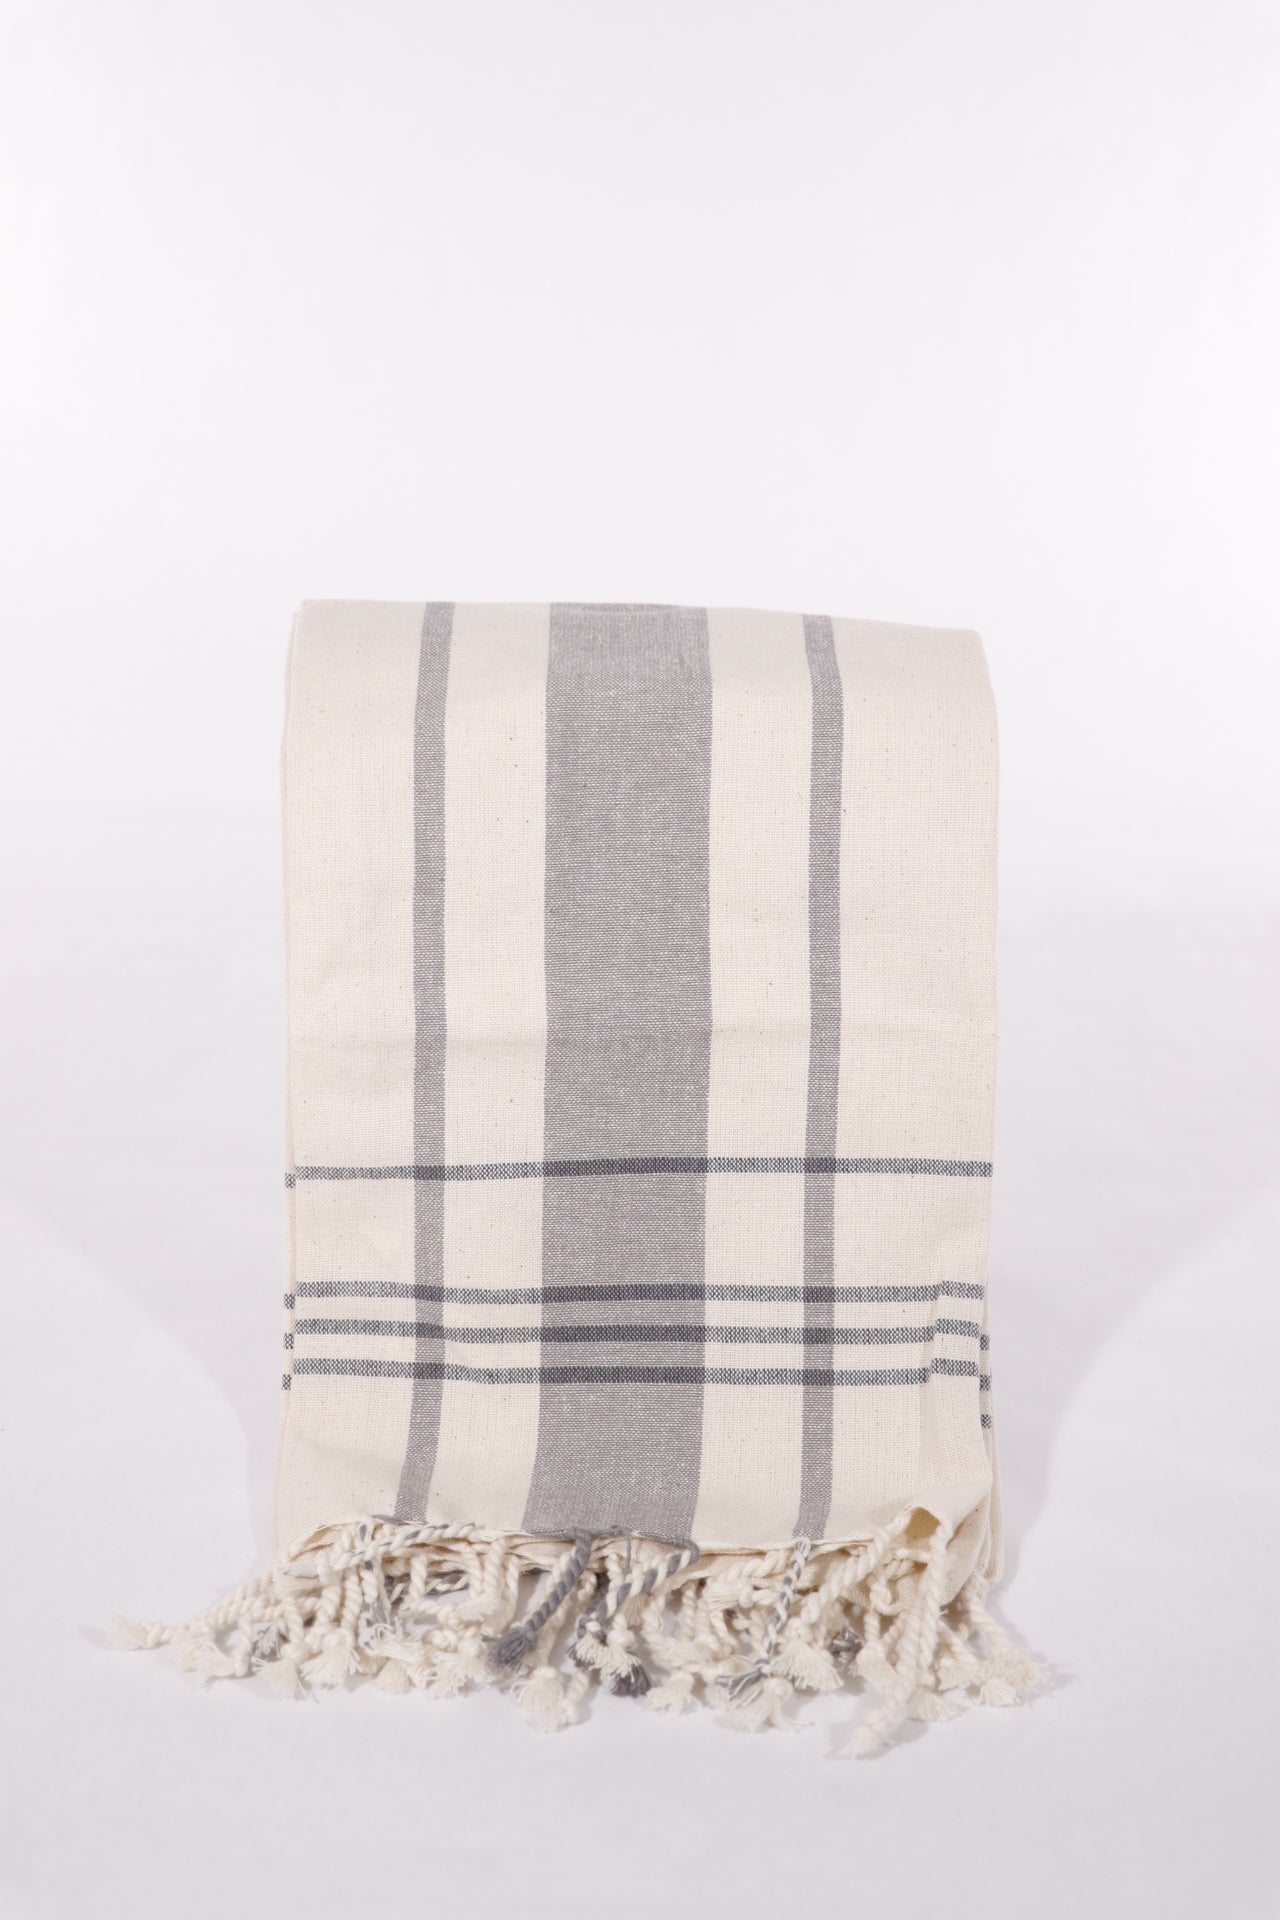 Multi Stripe Grey Fringed Kitchen Hand Towel Set of 2